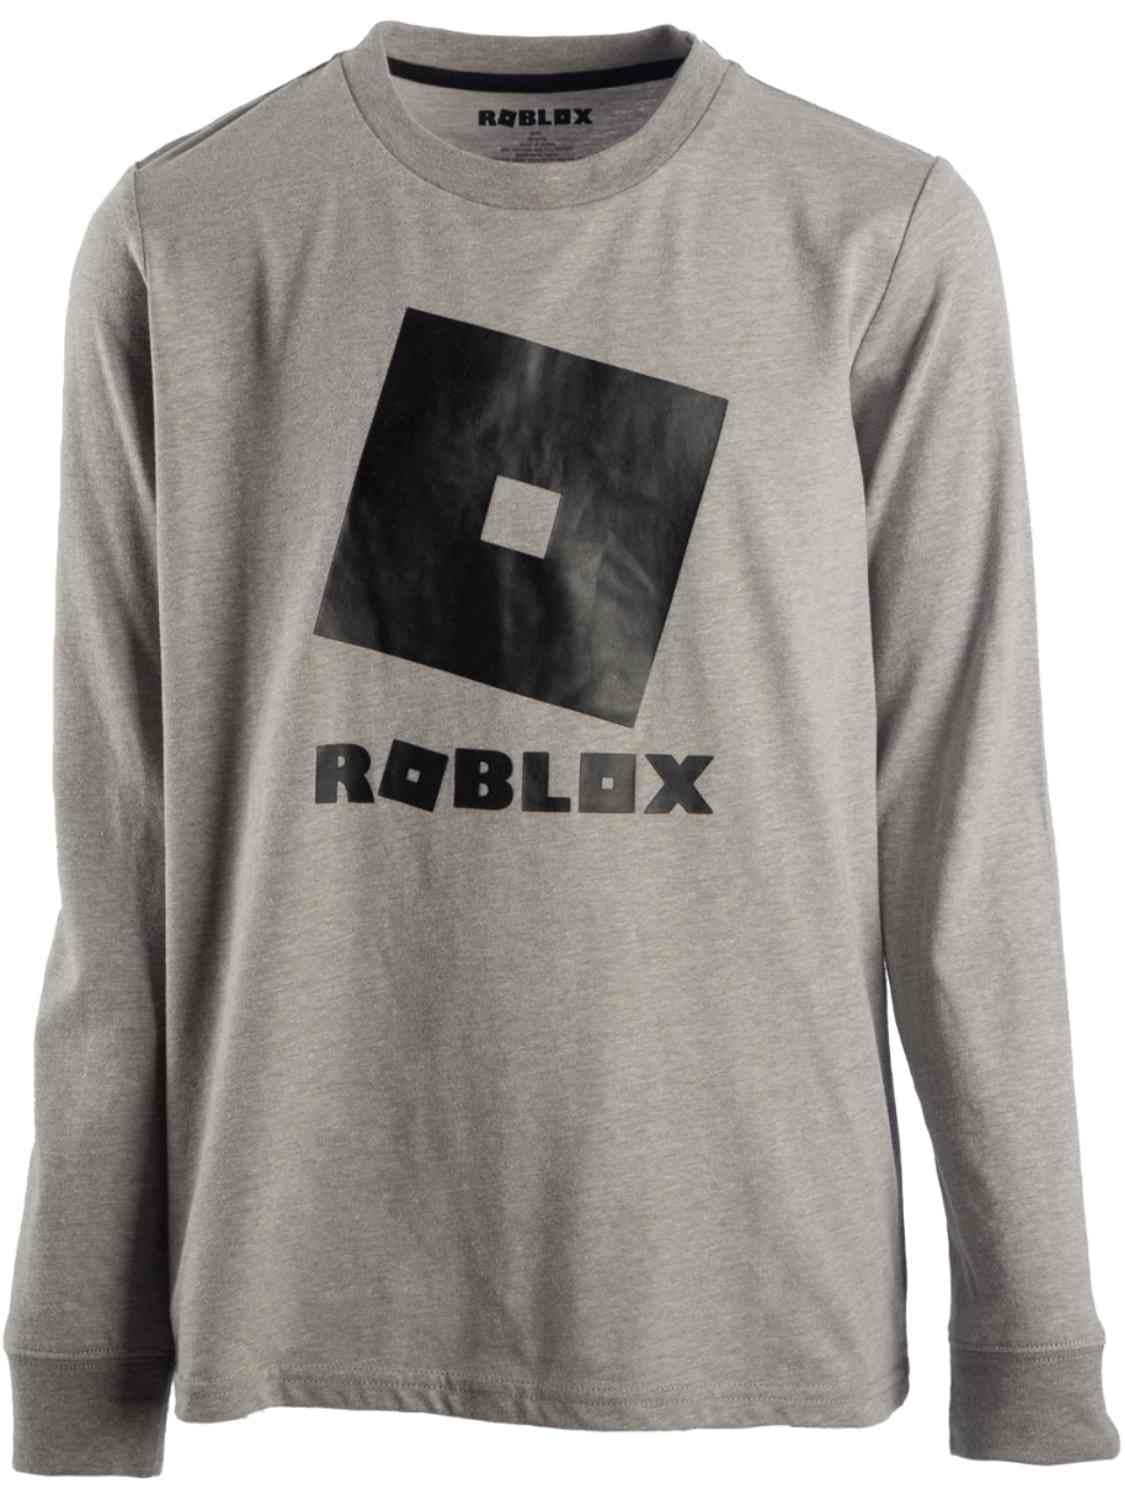 Black Roblox T Shirt : Roblox Game Logo Men S Black T Shirt Size S 3xl ...